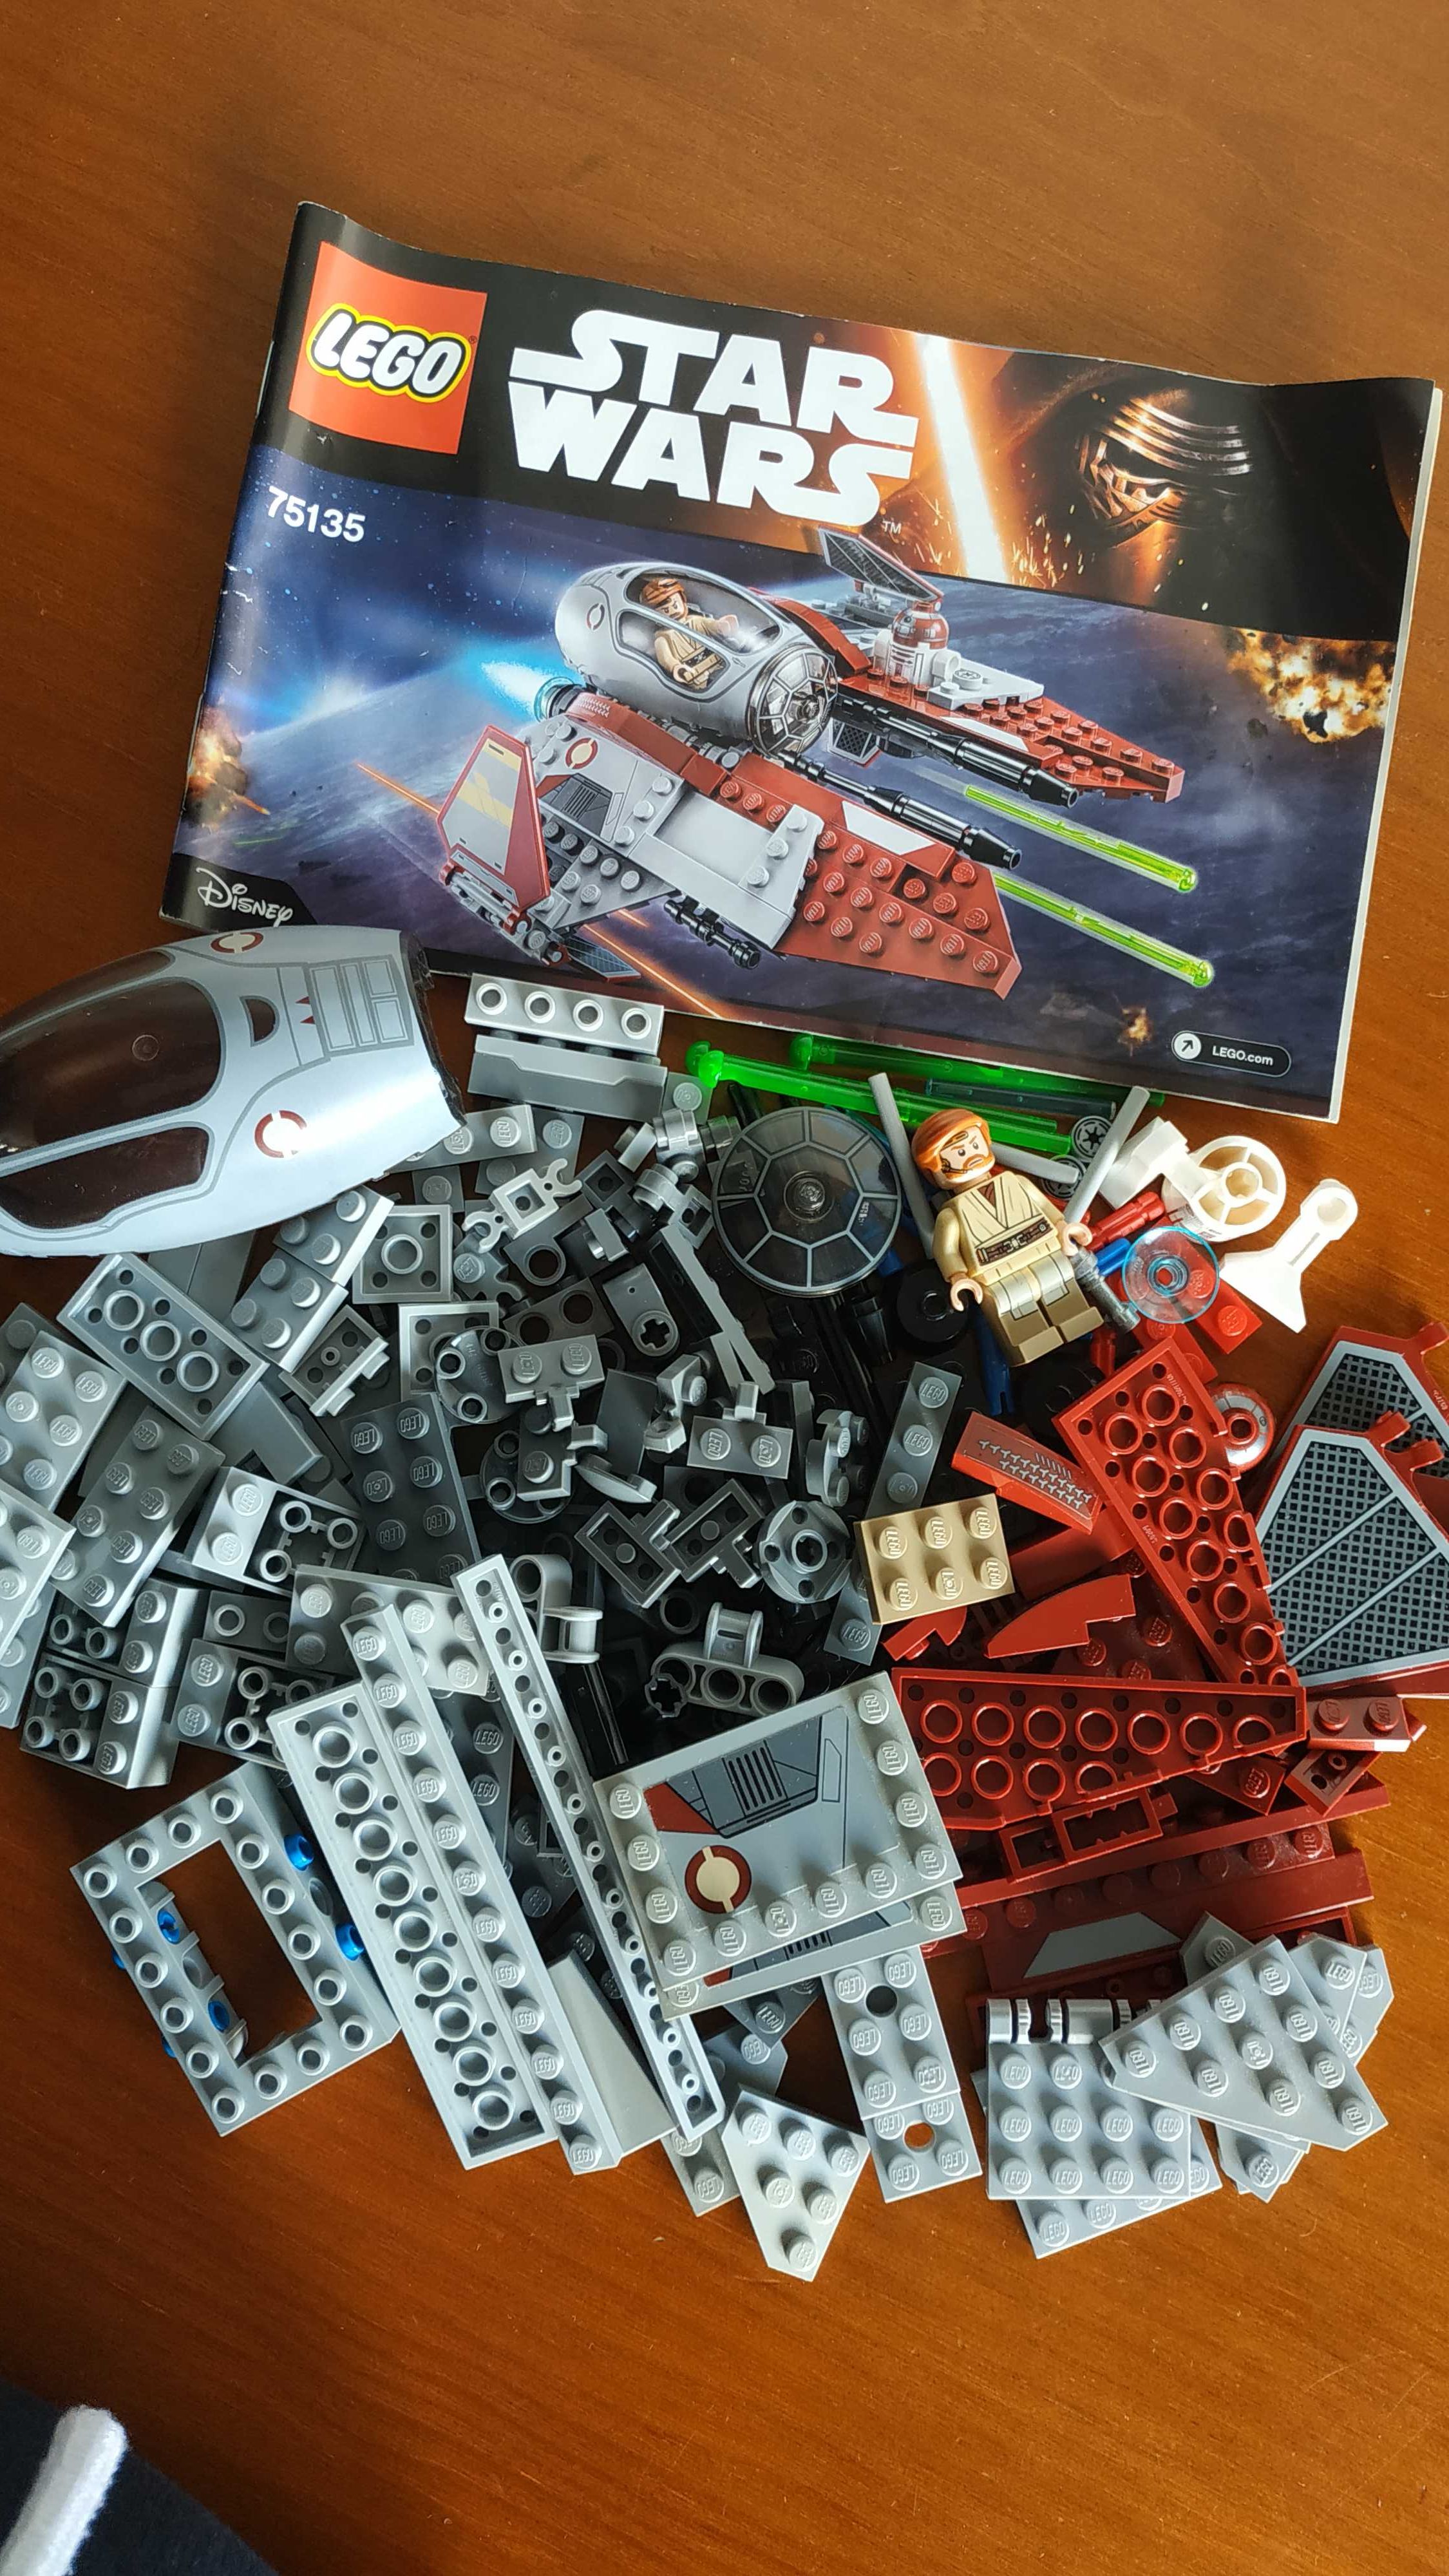 Lego - Star Wars - 75135 - COMPLETO